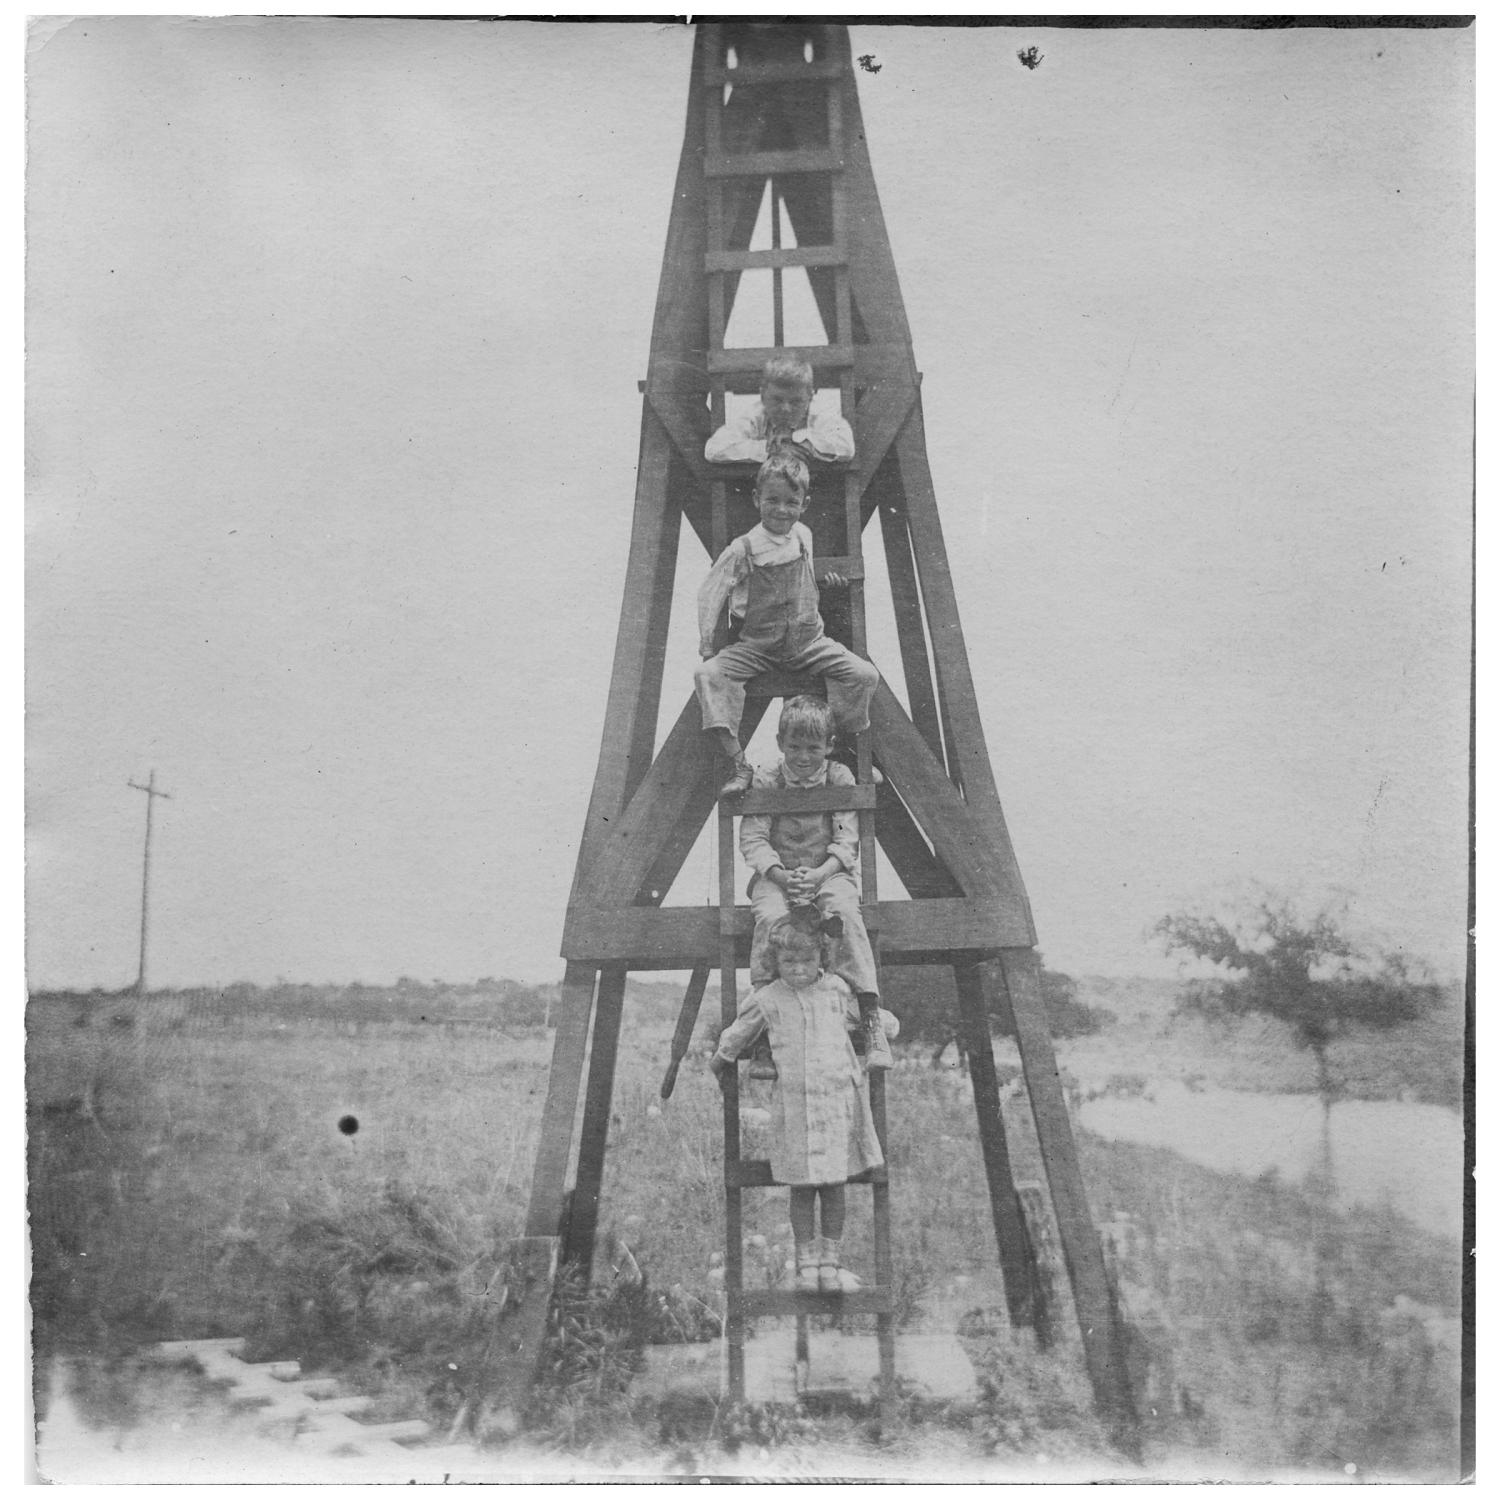 [Four Children on a Windpump's Ladder]
                                                
                                                    [Sequence #]: 1 of 2
                                                